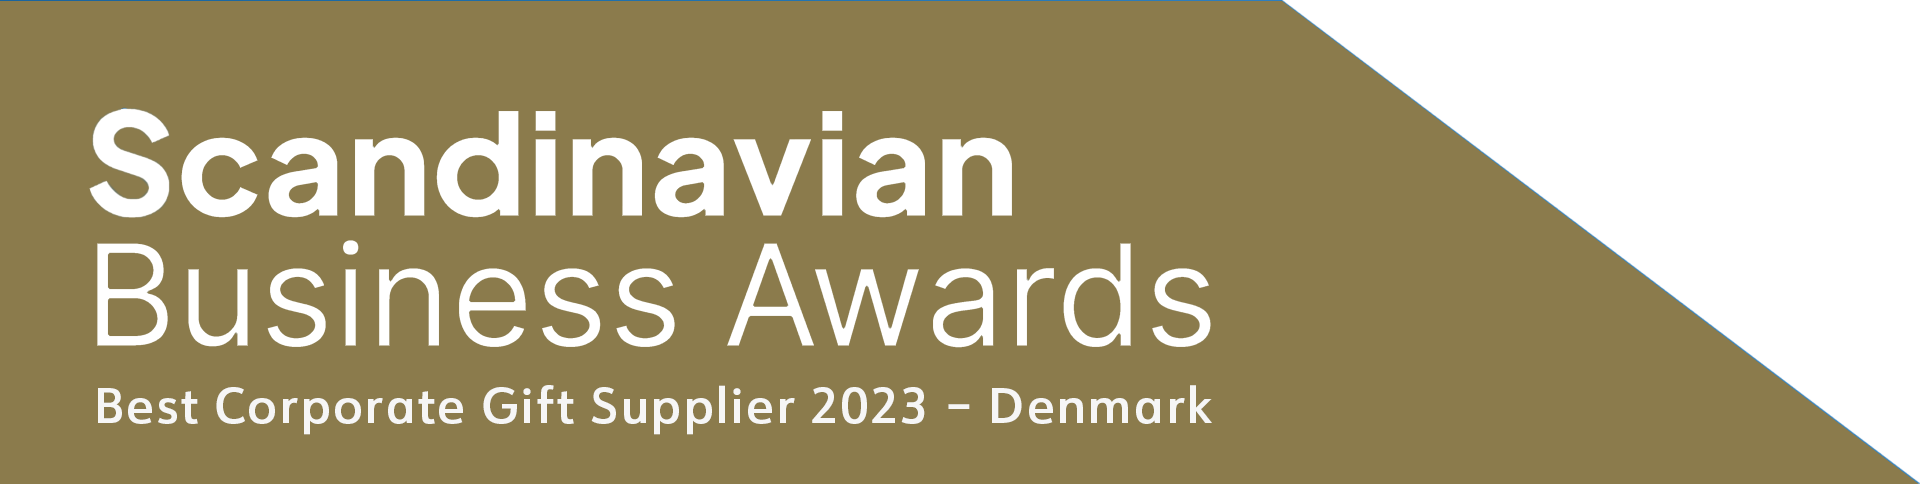 Scandinavian-Business-Awards-Main-Page-Logo_GULD_1